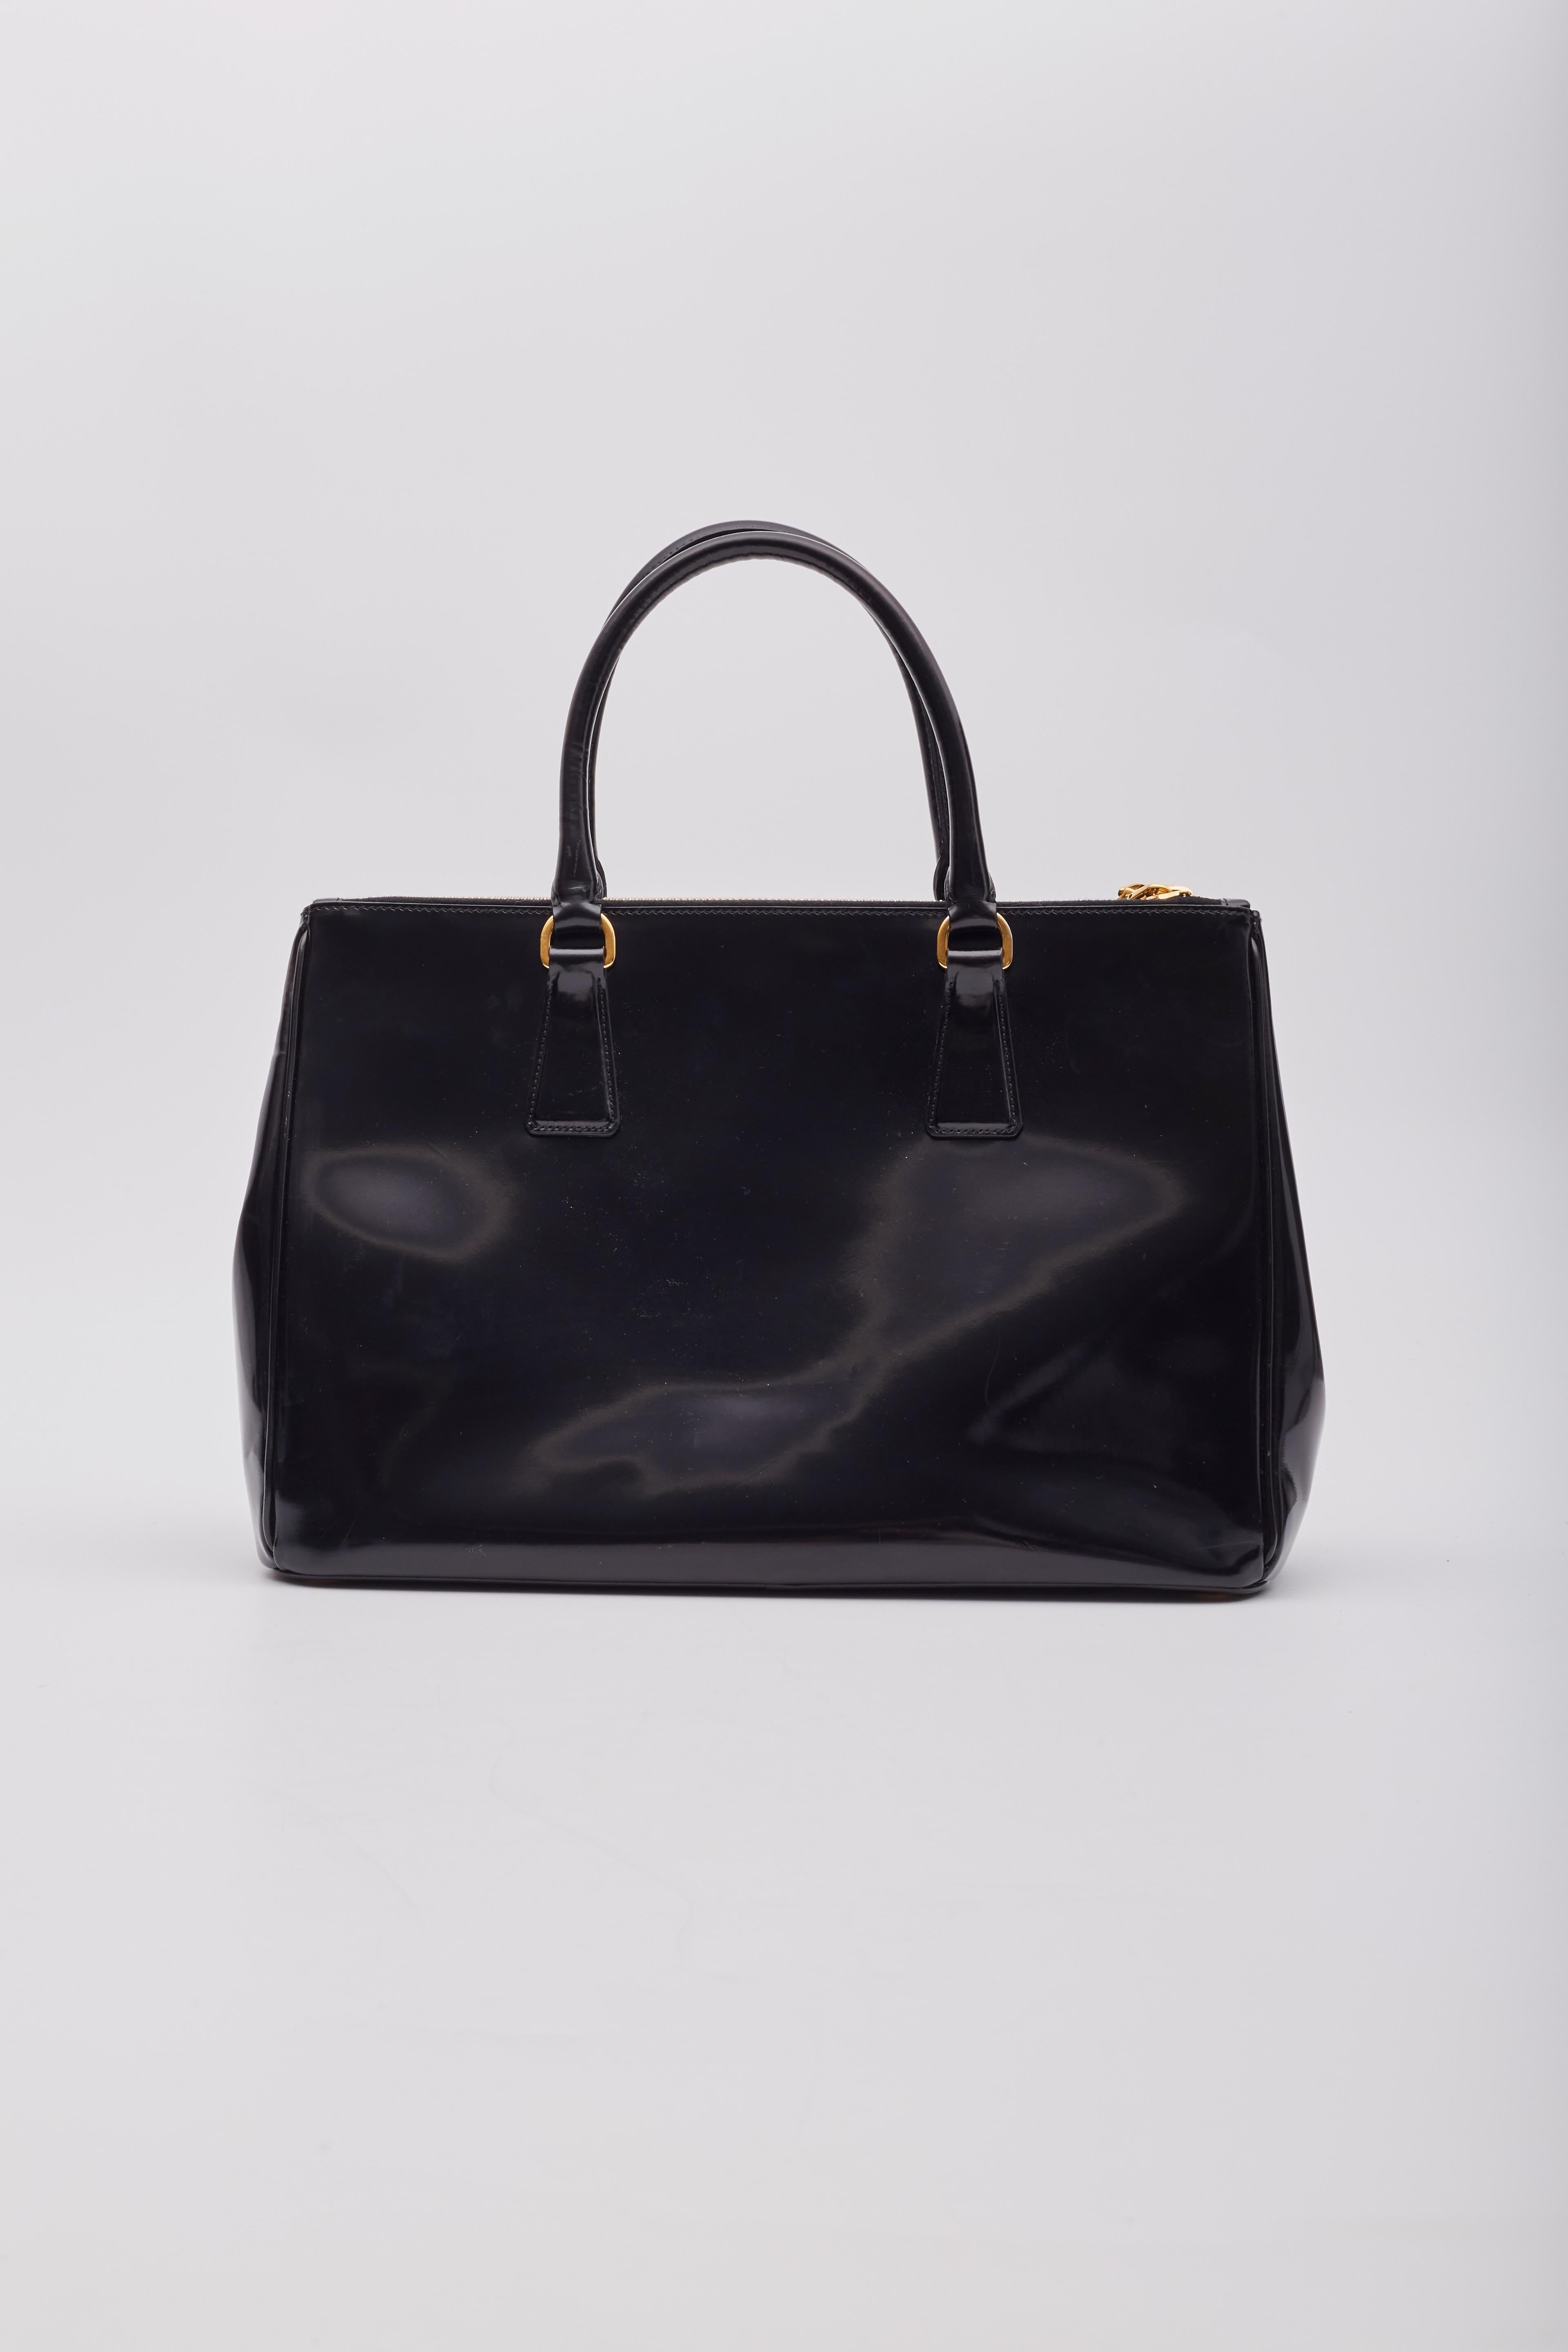 Women's Prada Black Patent Leather Galleria Tote Bag For Sale